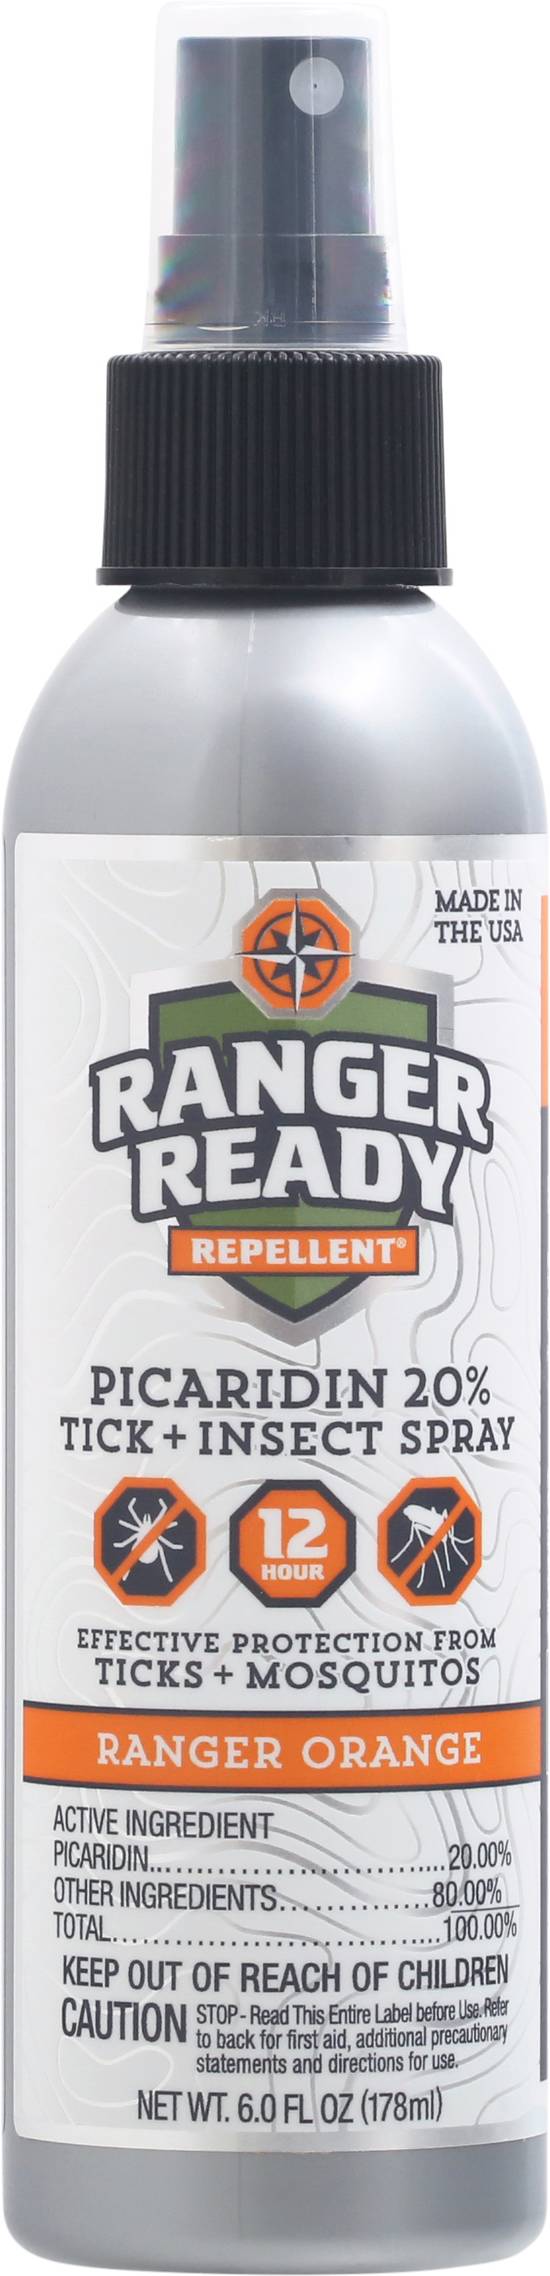 Ranger Ready Picaridin 20% Tick & Insect Spray Repellent (6 fl oz)